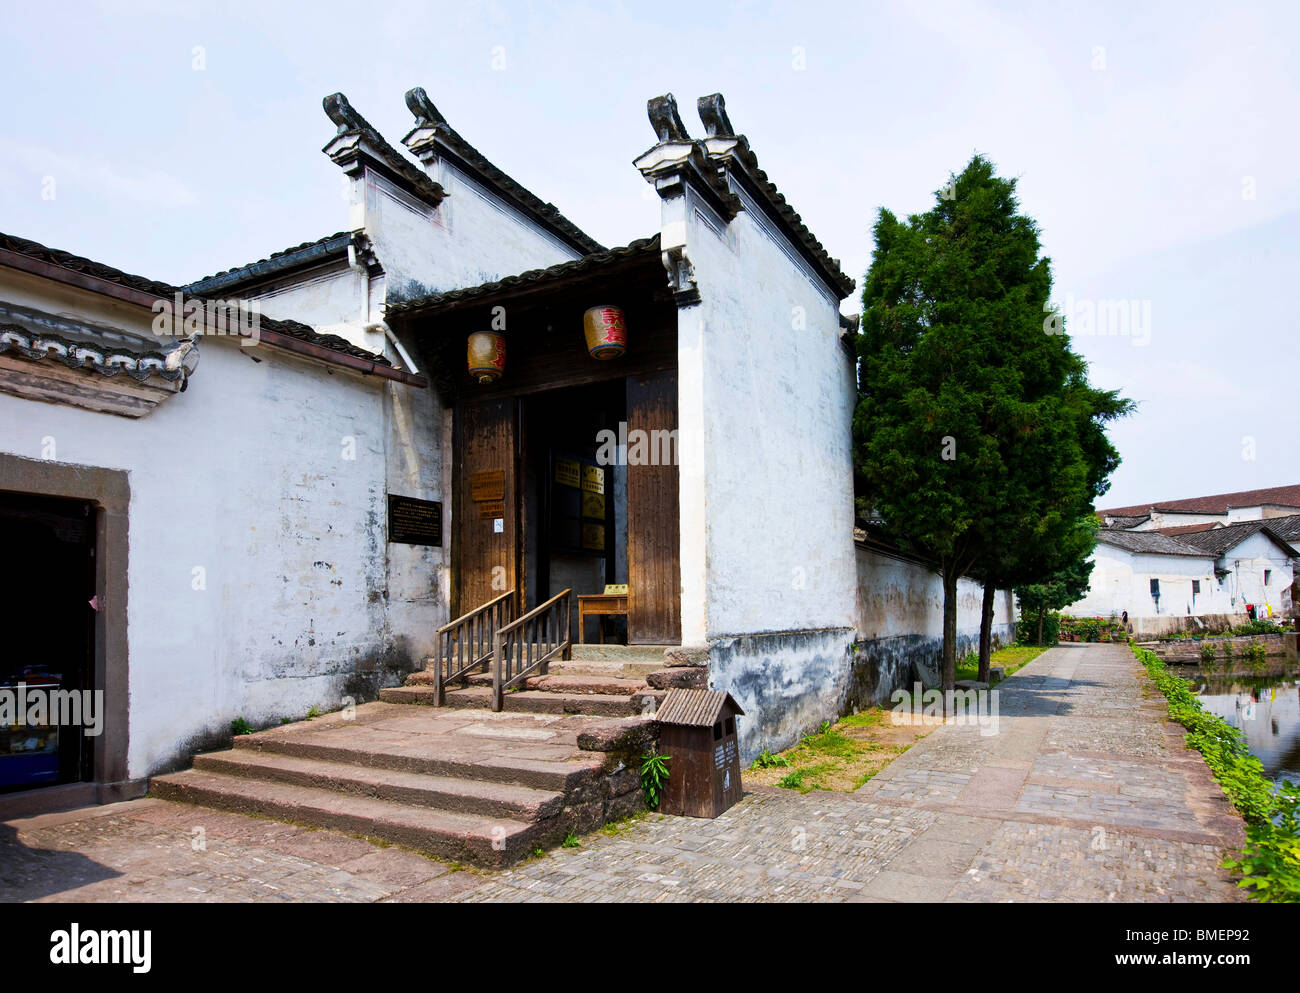 Ancestral Shrine Of Zhuge Liang, Zhuge Bagua Village, Jinhua City, Zhejiang Province, China Stock Photo